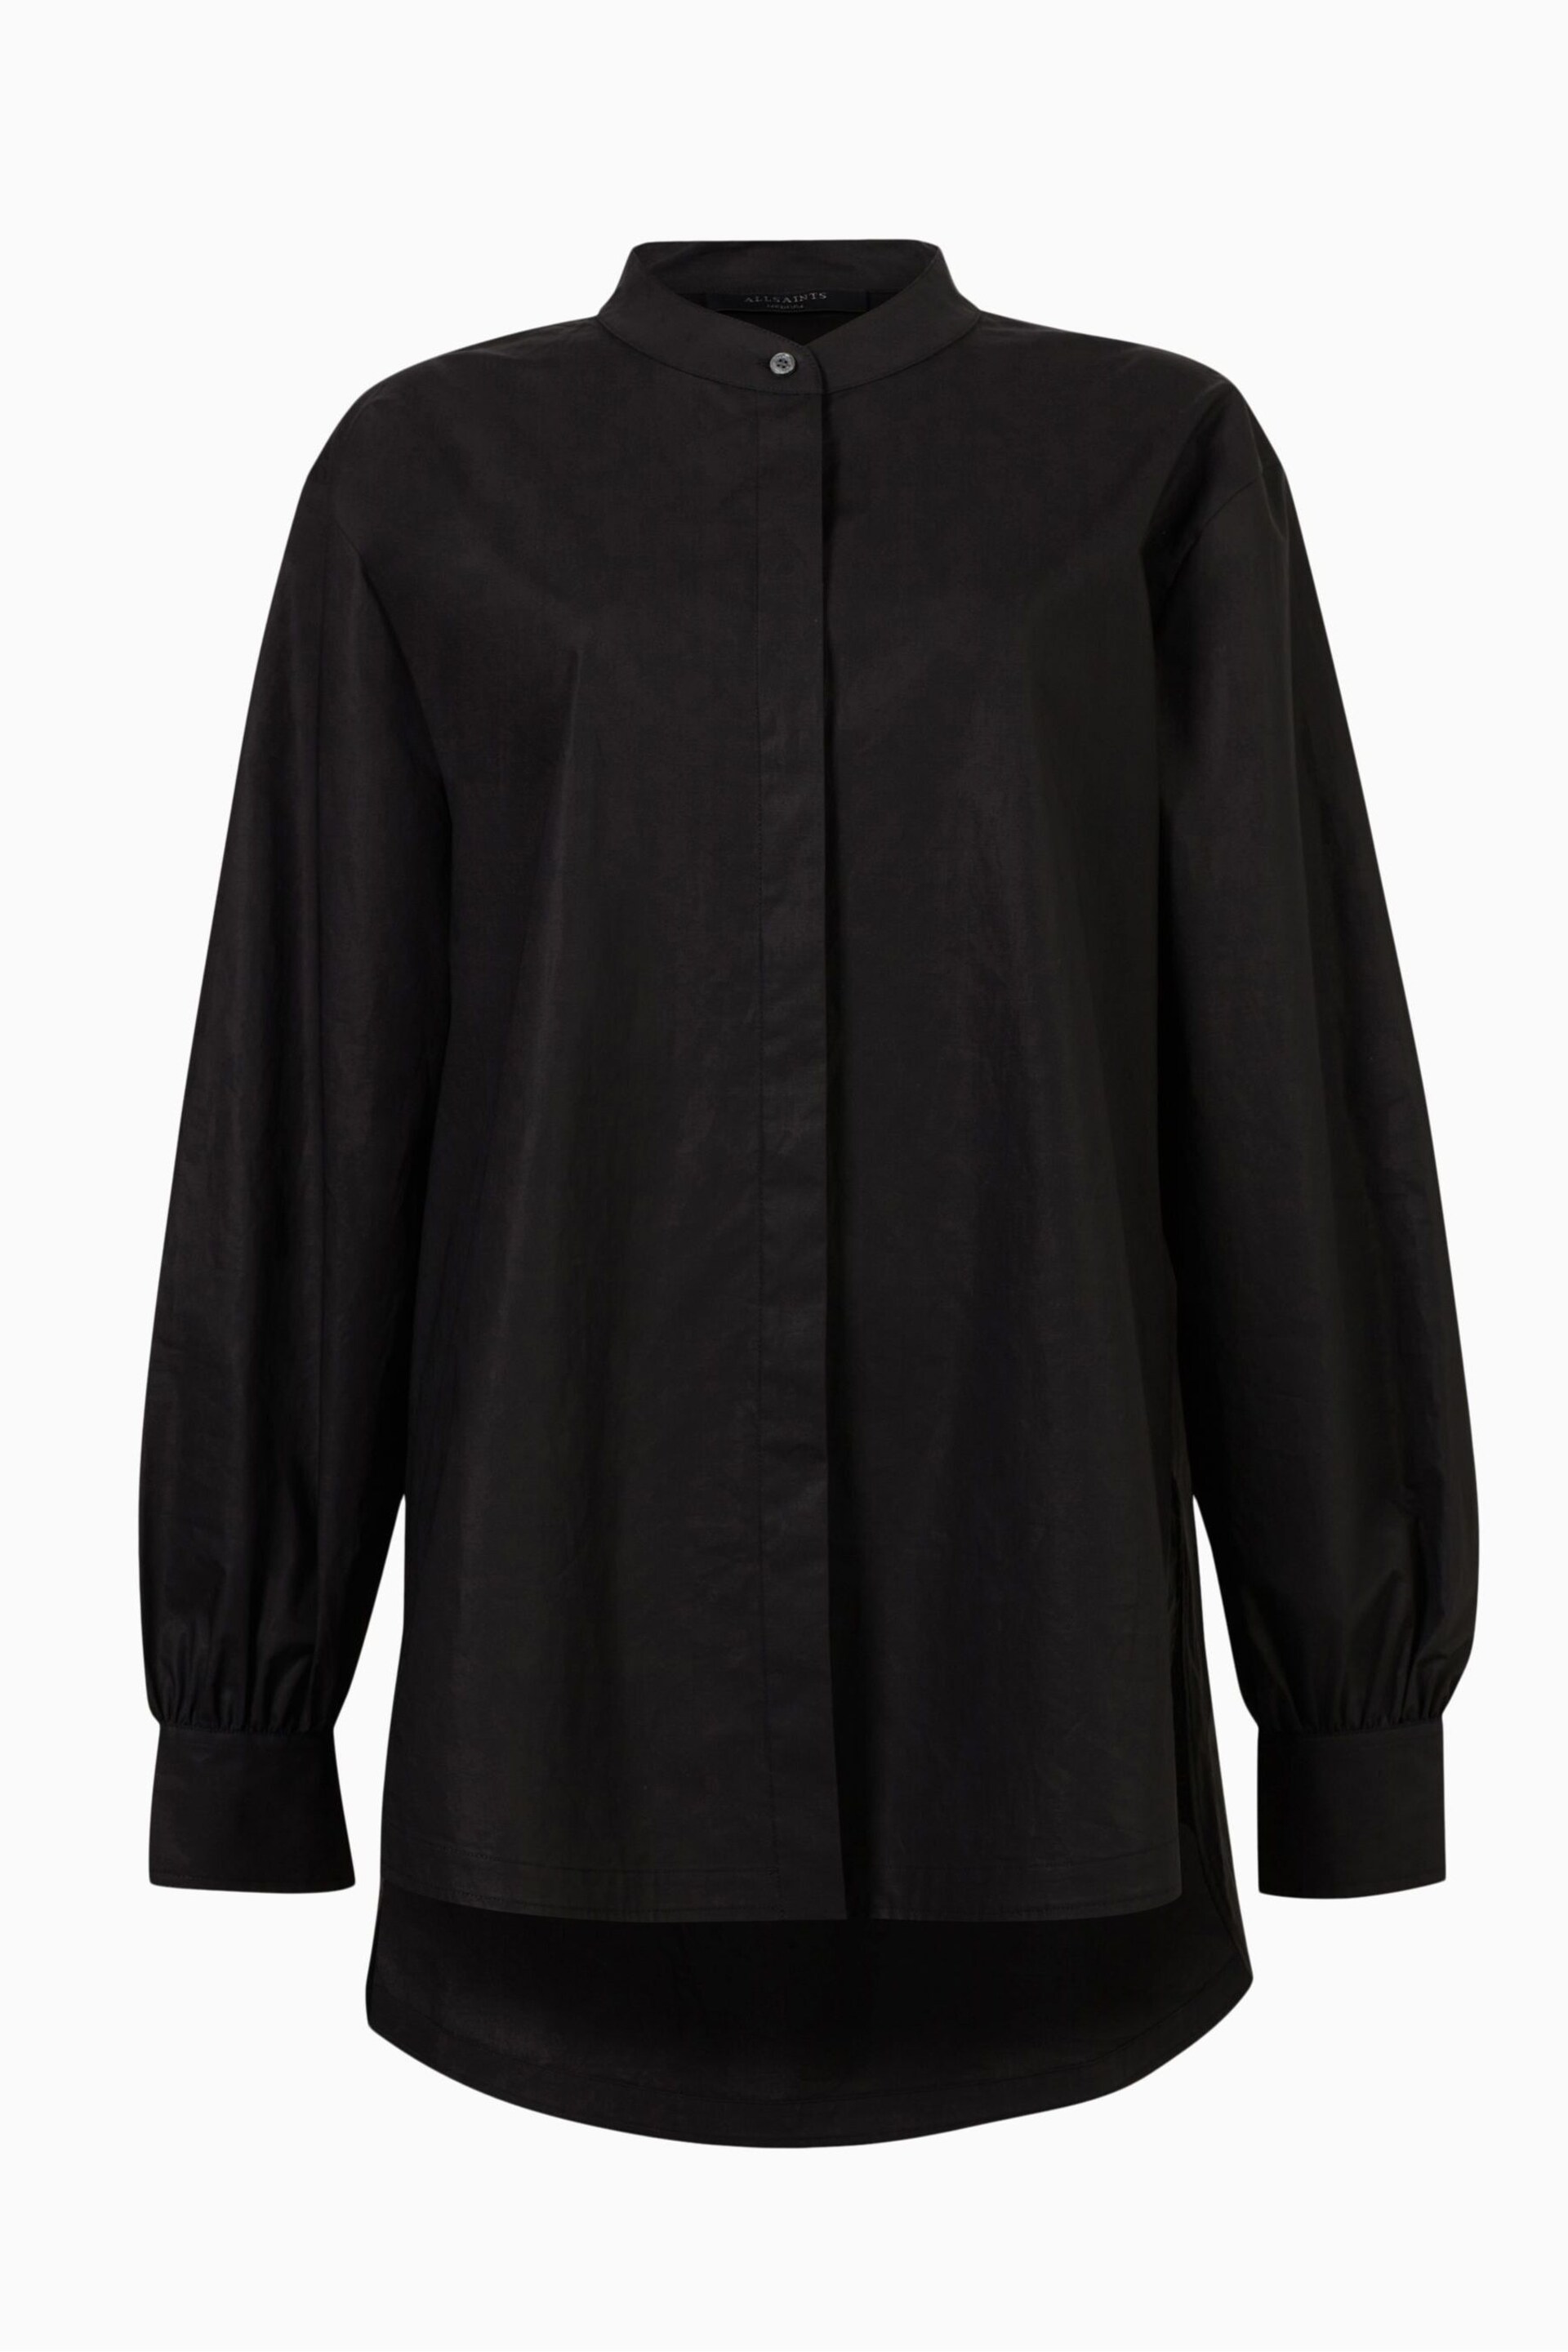 AllSaints Black Marcie Shirt - Image 7 of 7